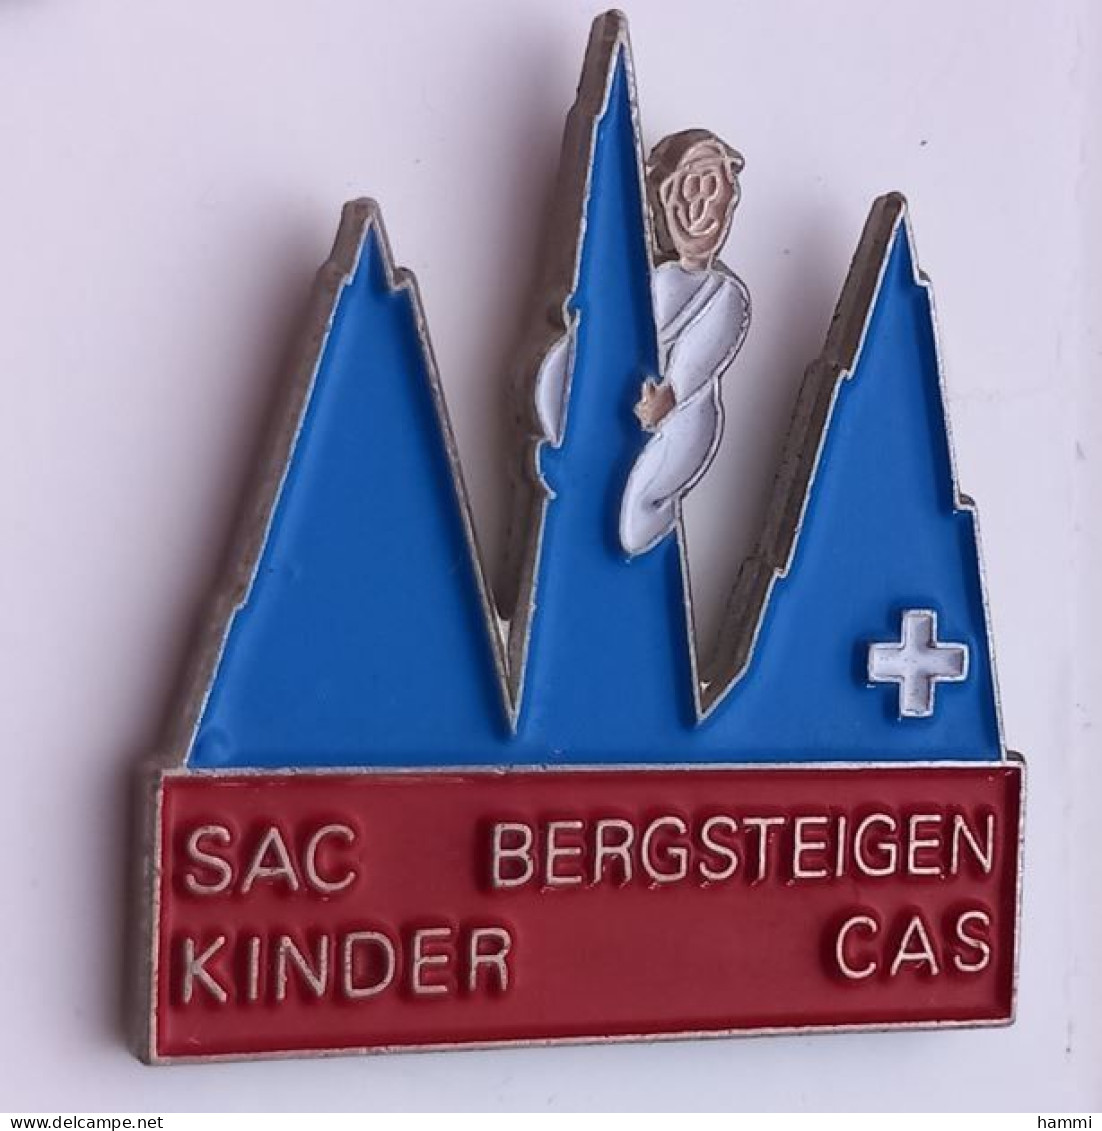 PO70 Pin's Sac Bergsteigen Kinder CAS Via Ferrata Escalade Alpinisme Deutschland Germany Achat Immédiat - Alpinism, Mountaineering